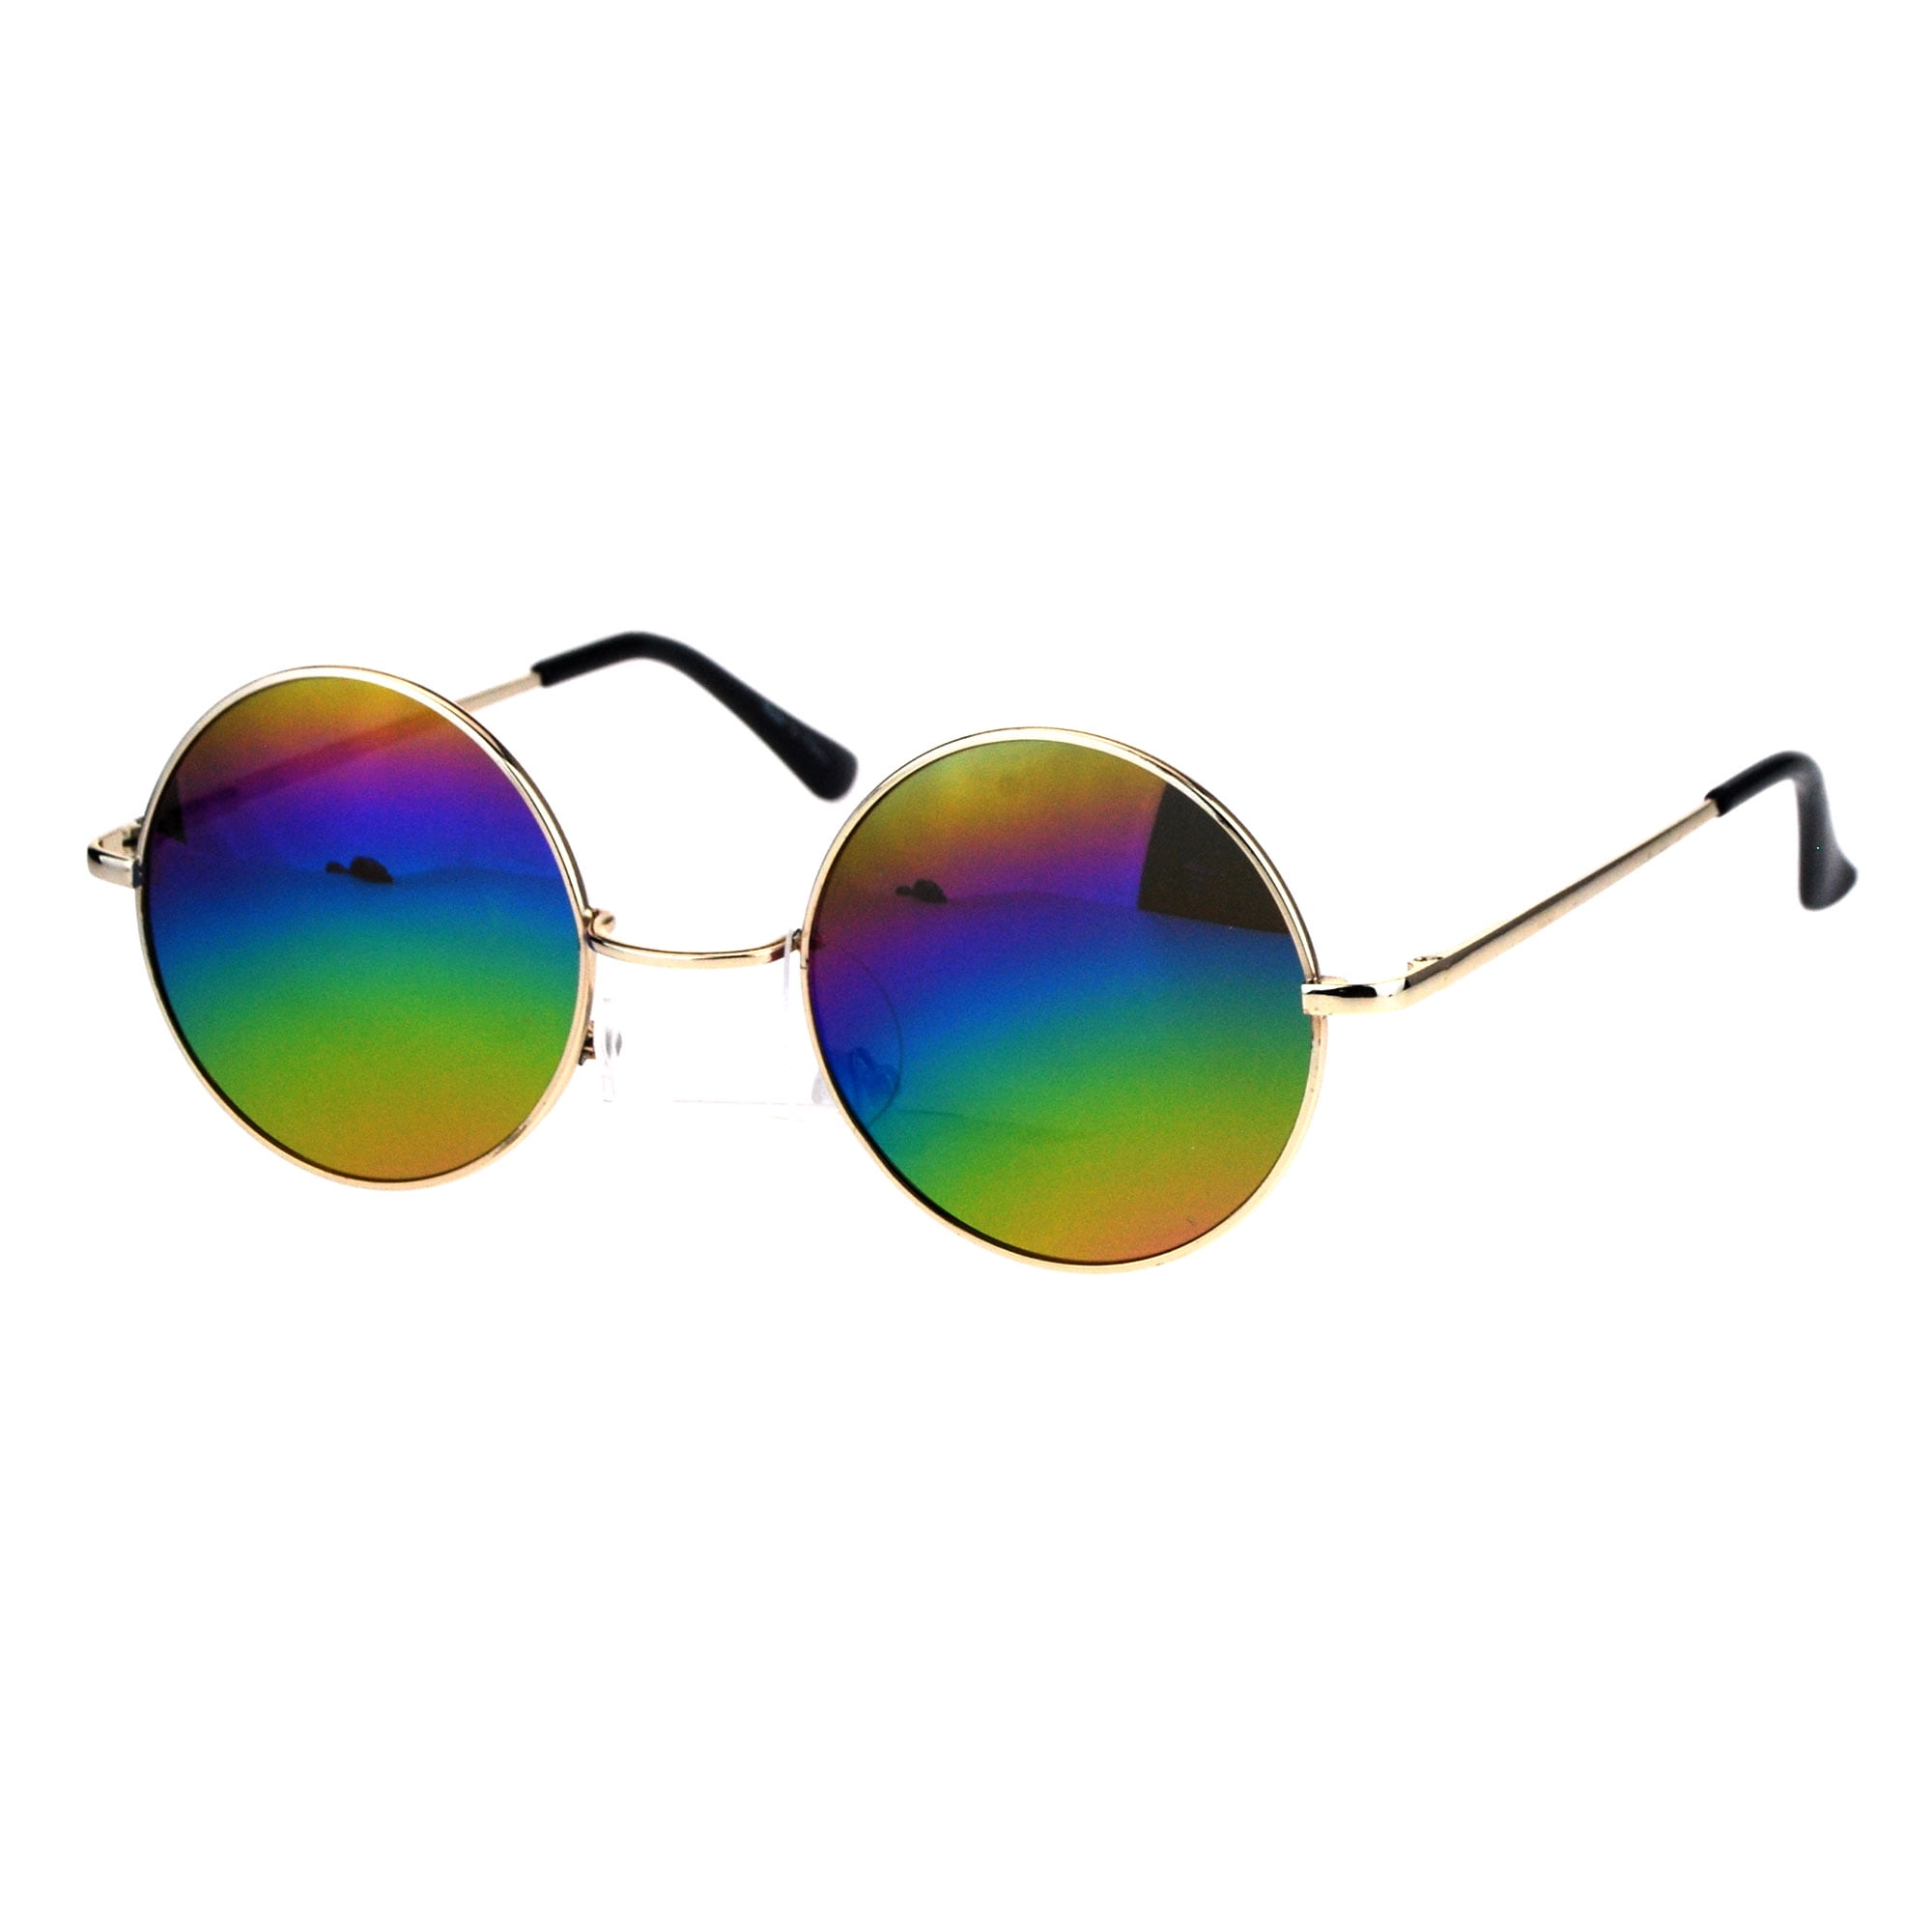 Reflective Color Mirrored Hippie Groove Round Circle Lens Retro Sunglasses Gold Rainbow 1d7c0165 572d 4729 a5ec 7edcff2e1541 1.3bef33a2e7351a1127dd9a6ffbce8090